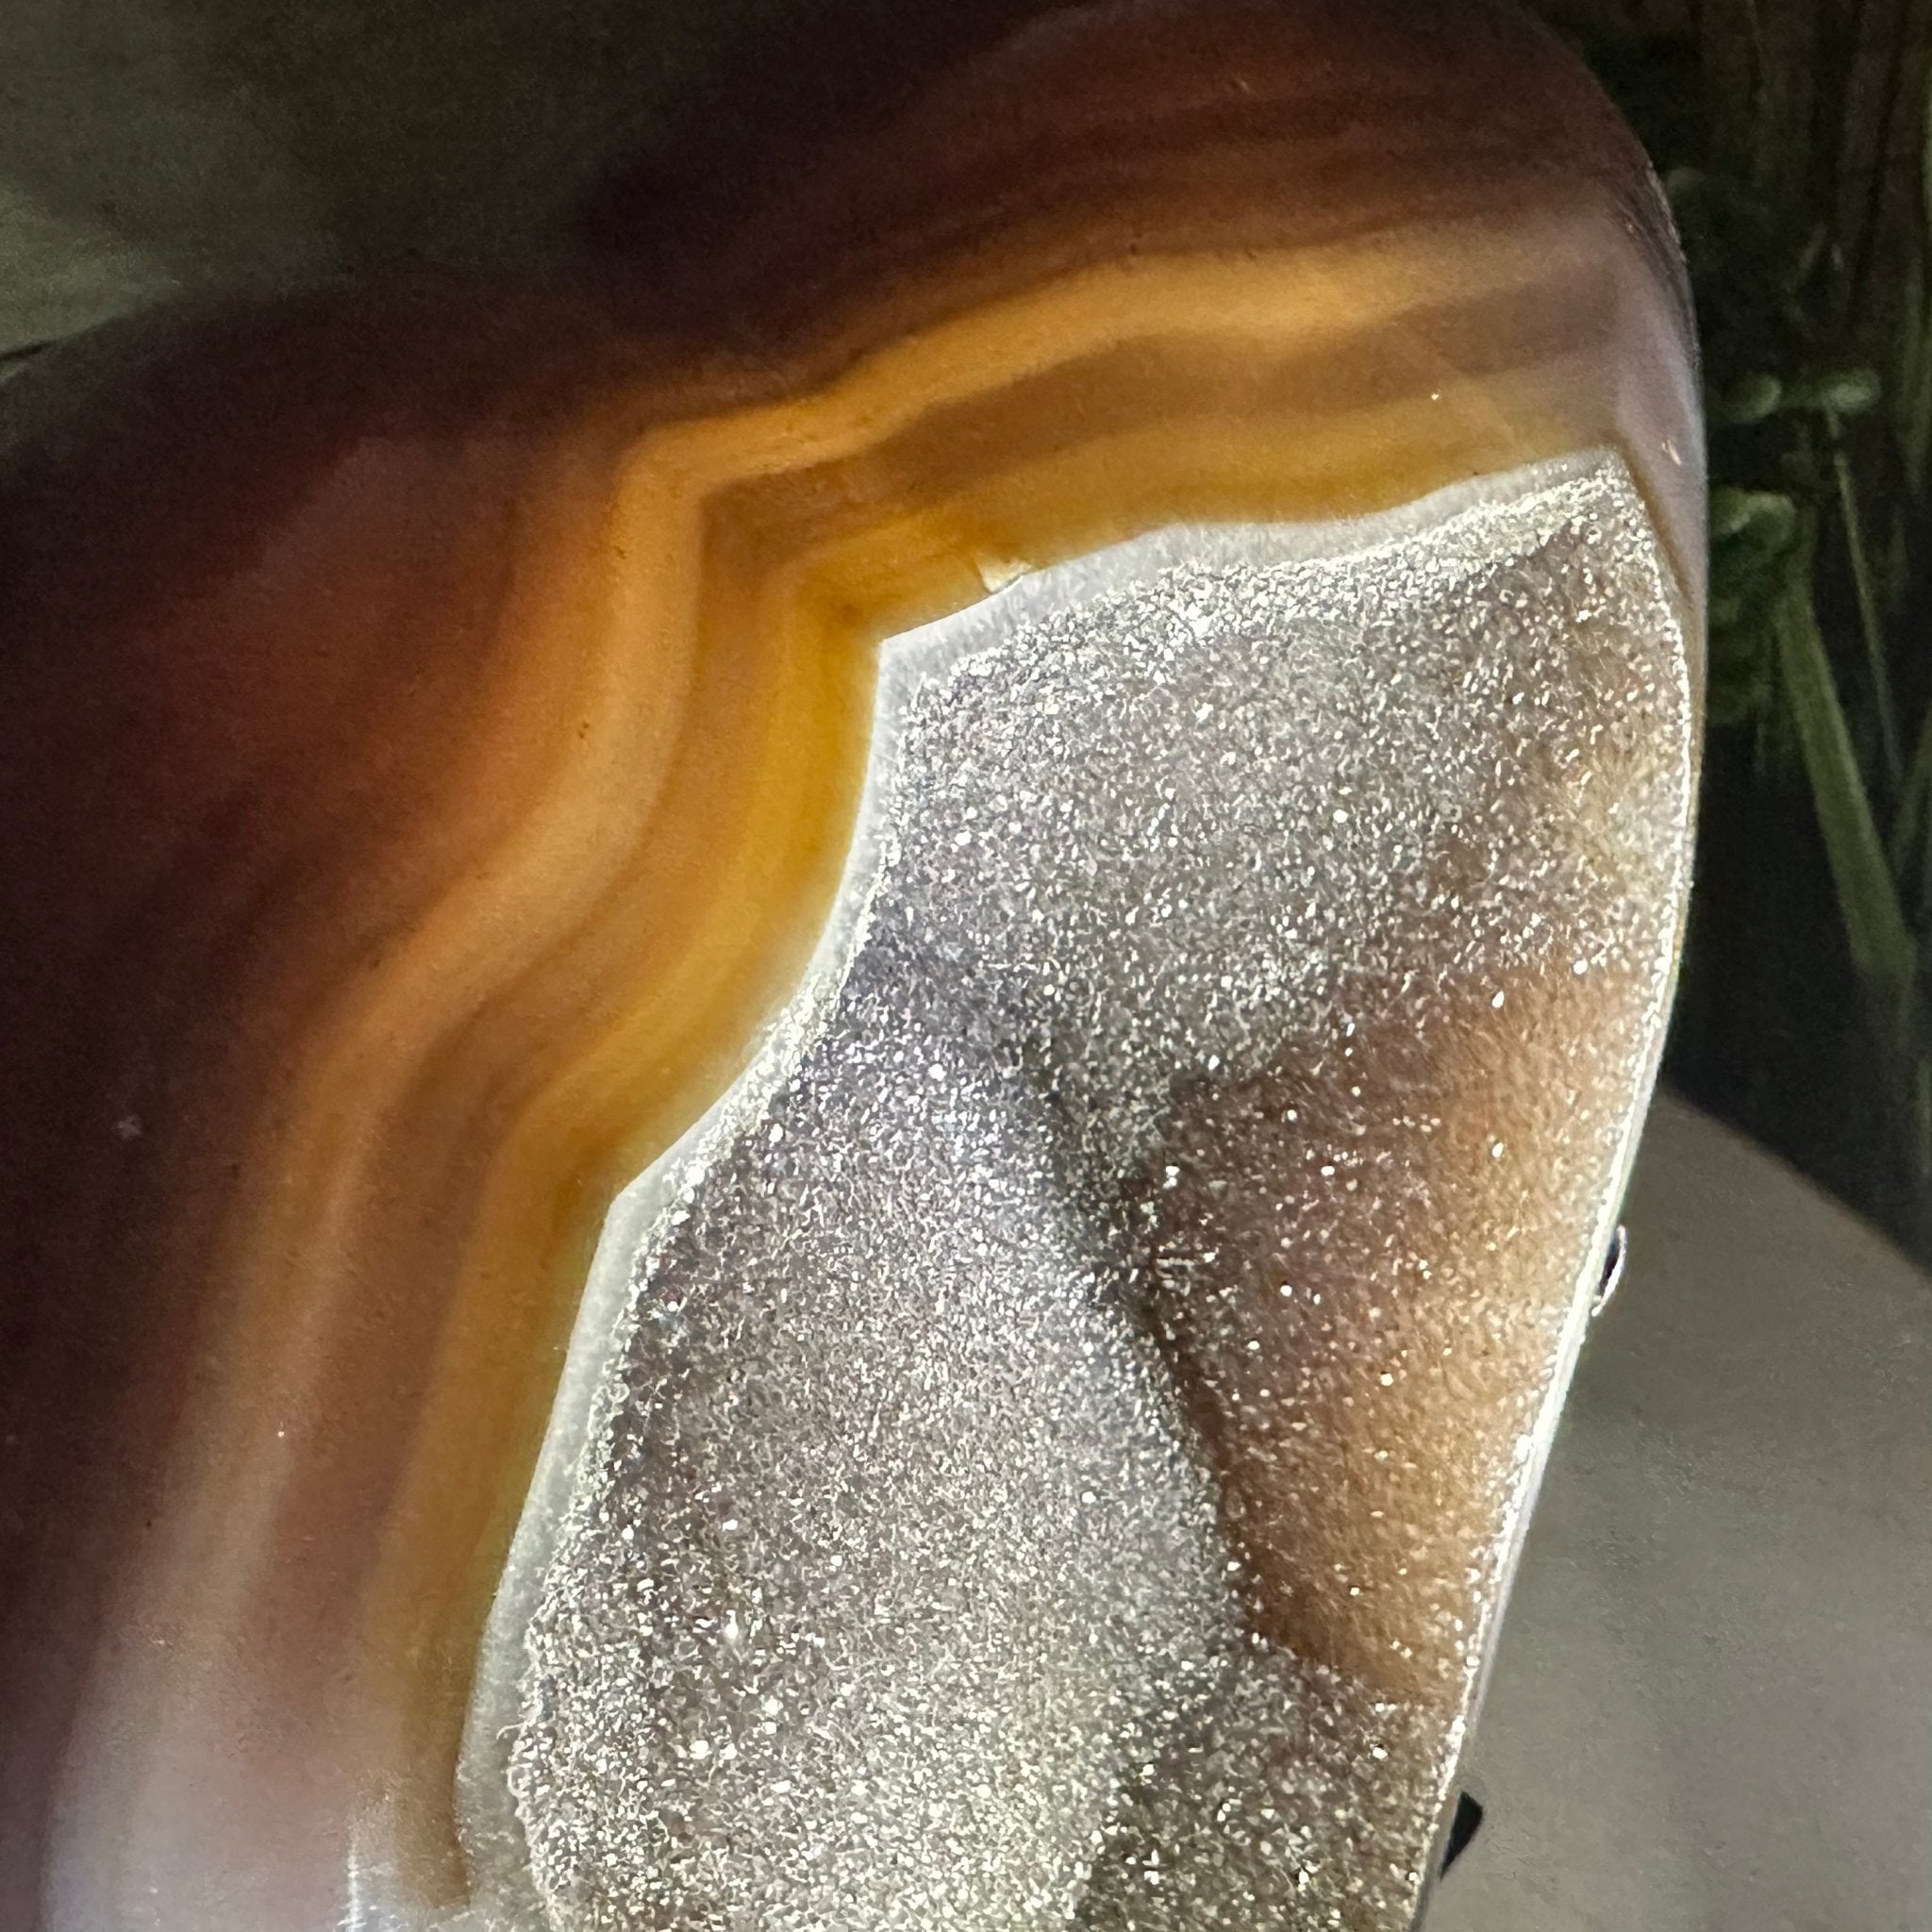 Polished Agate Heart Geode on a Metal Stand, 9.8 lbs & 8.7" Tall, Model #5468-0082 by Brazil Gems - Brazil GemsBrazil GemsPolished Agate Heart Geode on a Metal Stand, 9.8 lbs & 8.7" Tall, Model #5468-0082 by Brazil GemsHearts5468-0082